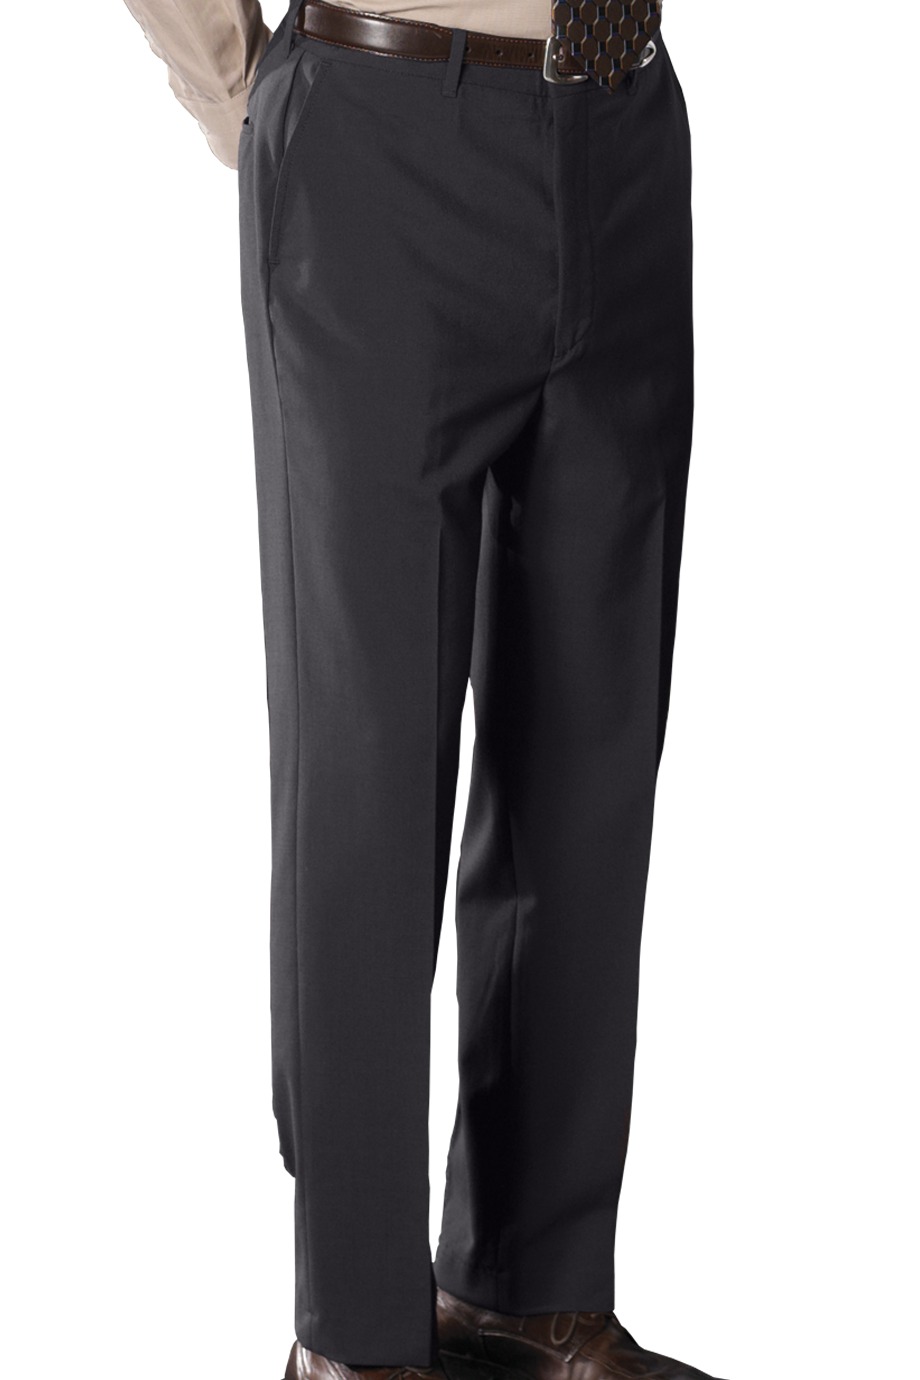 Edwards Garment 2780 - Men's Wool Blend Flat Front Pant